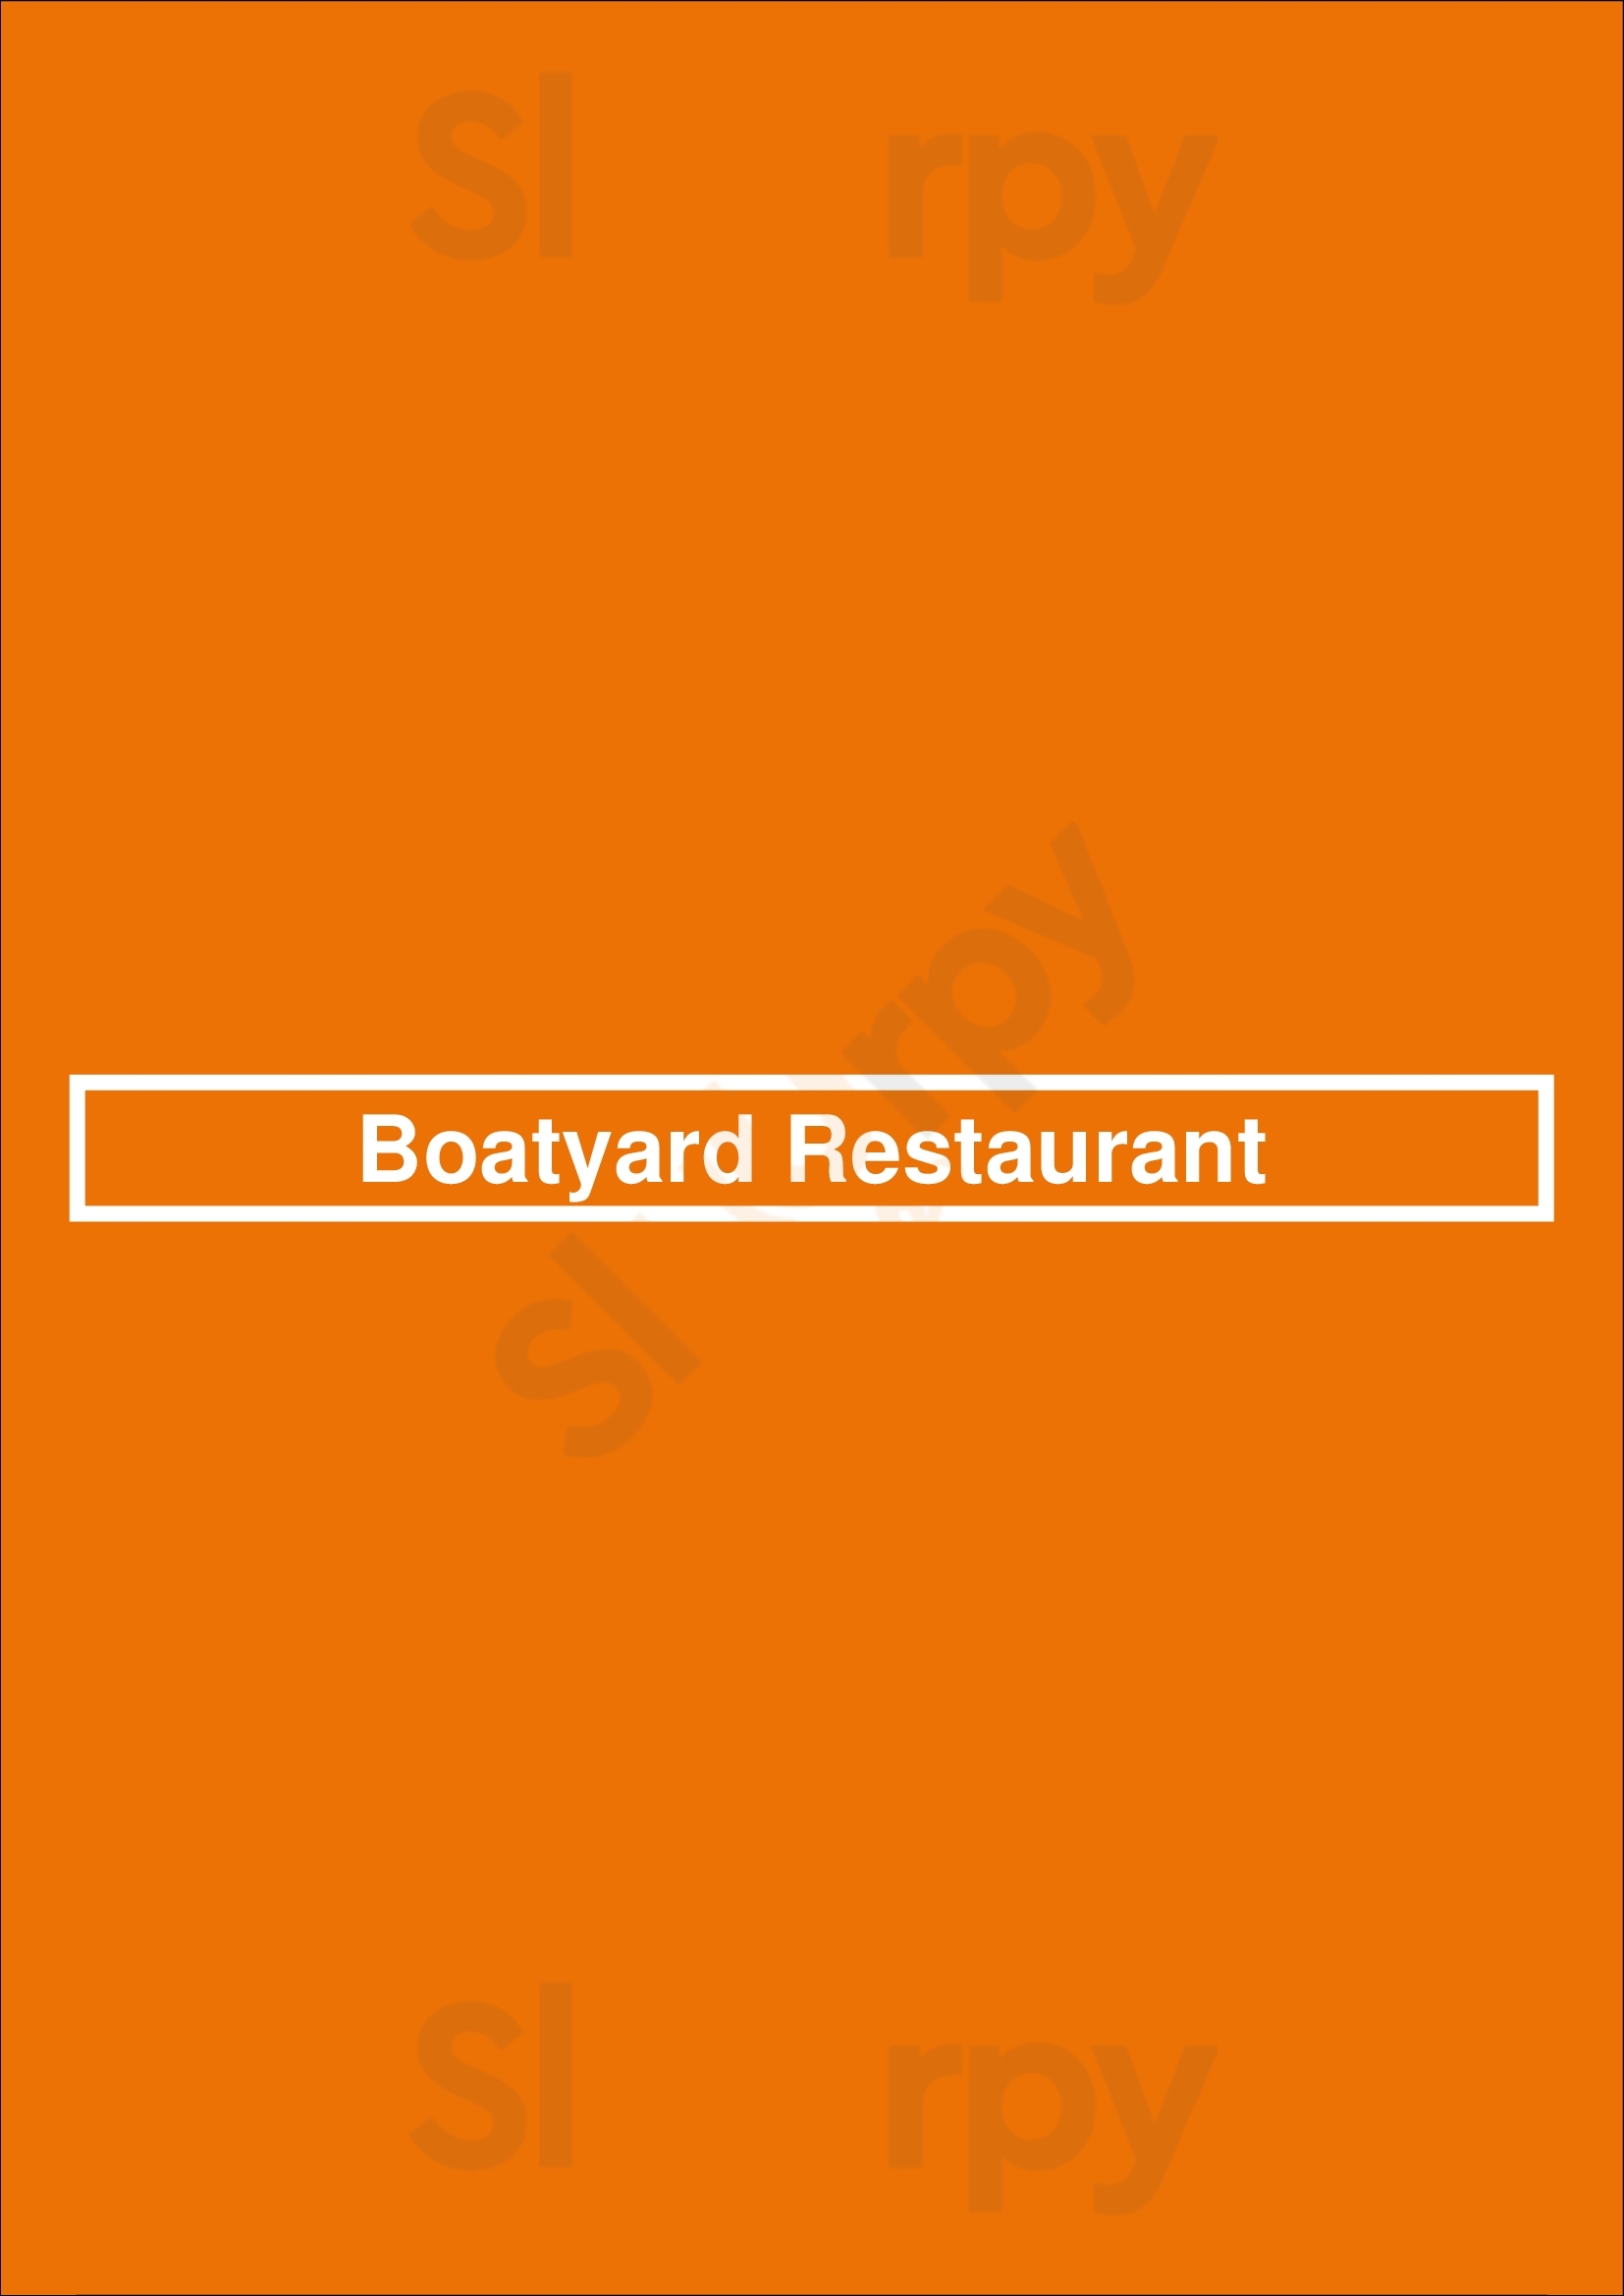 Boatyard Fort Lauderdale Menu - 1